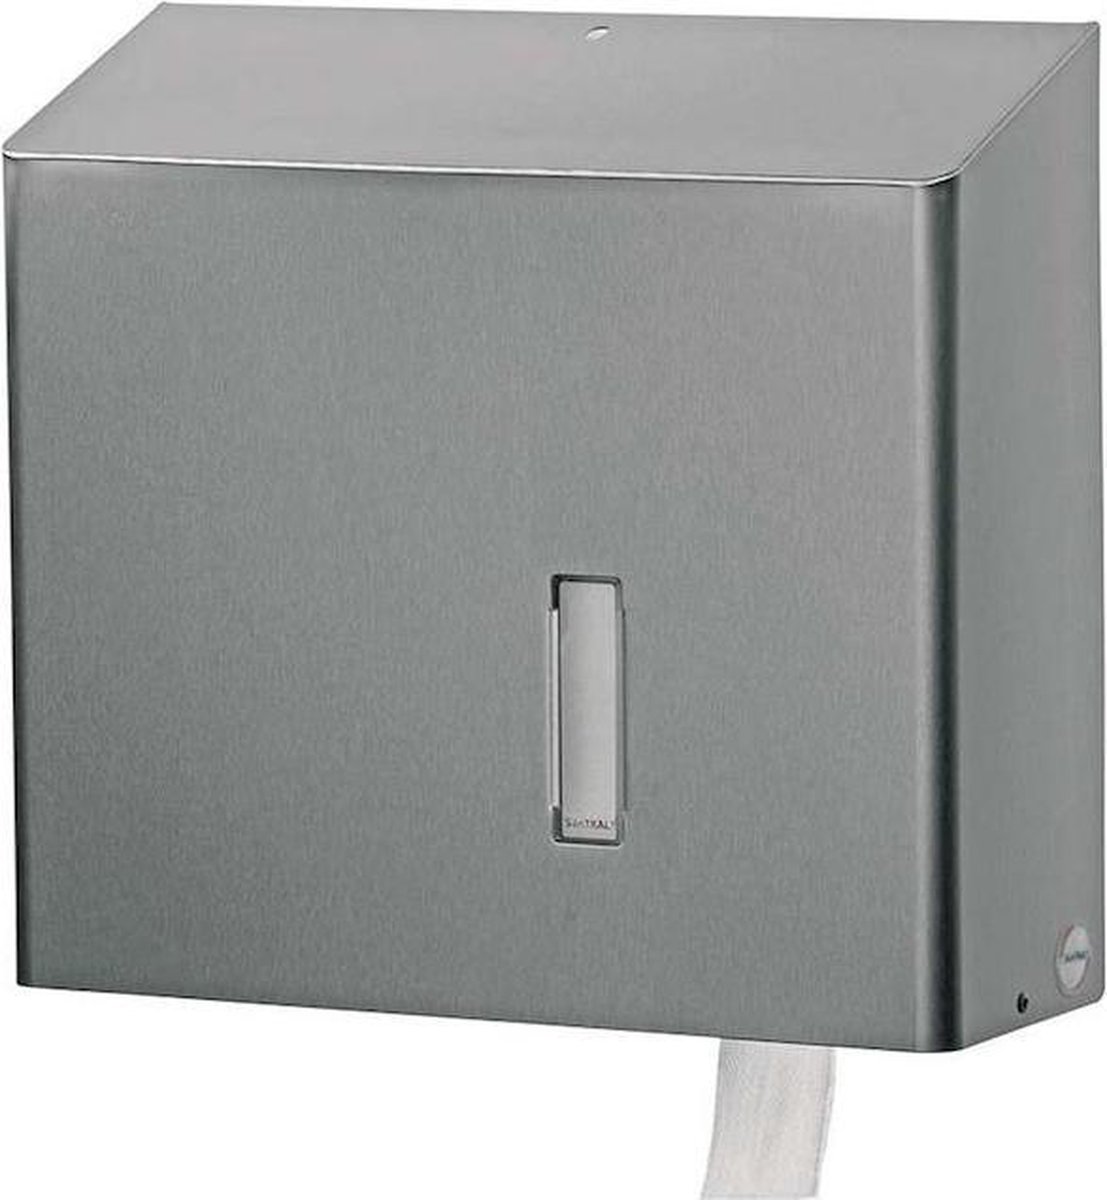 Dispenser for toilet paper for wall mounting for 1 JUMBO roll from Dan Dryer